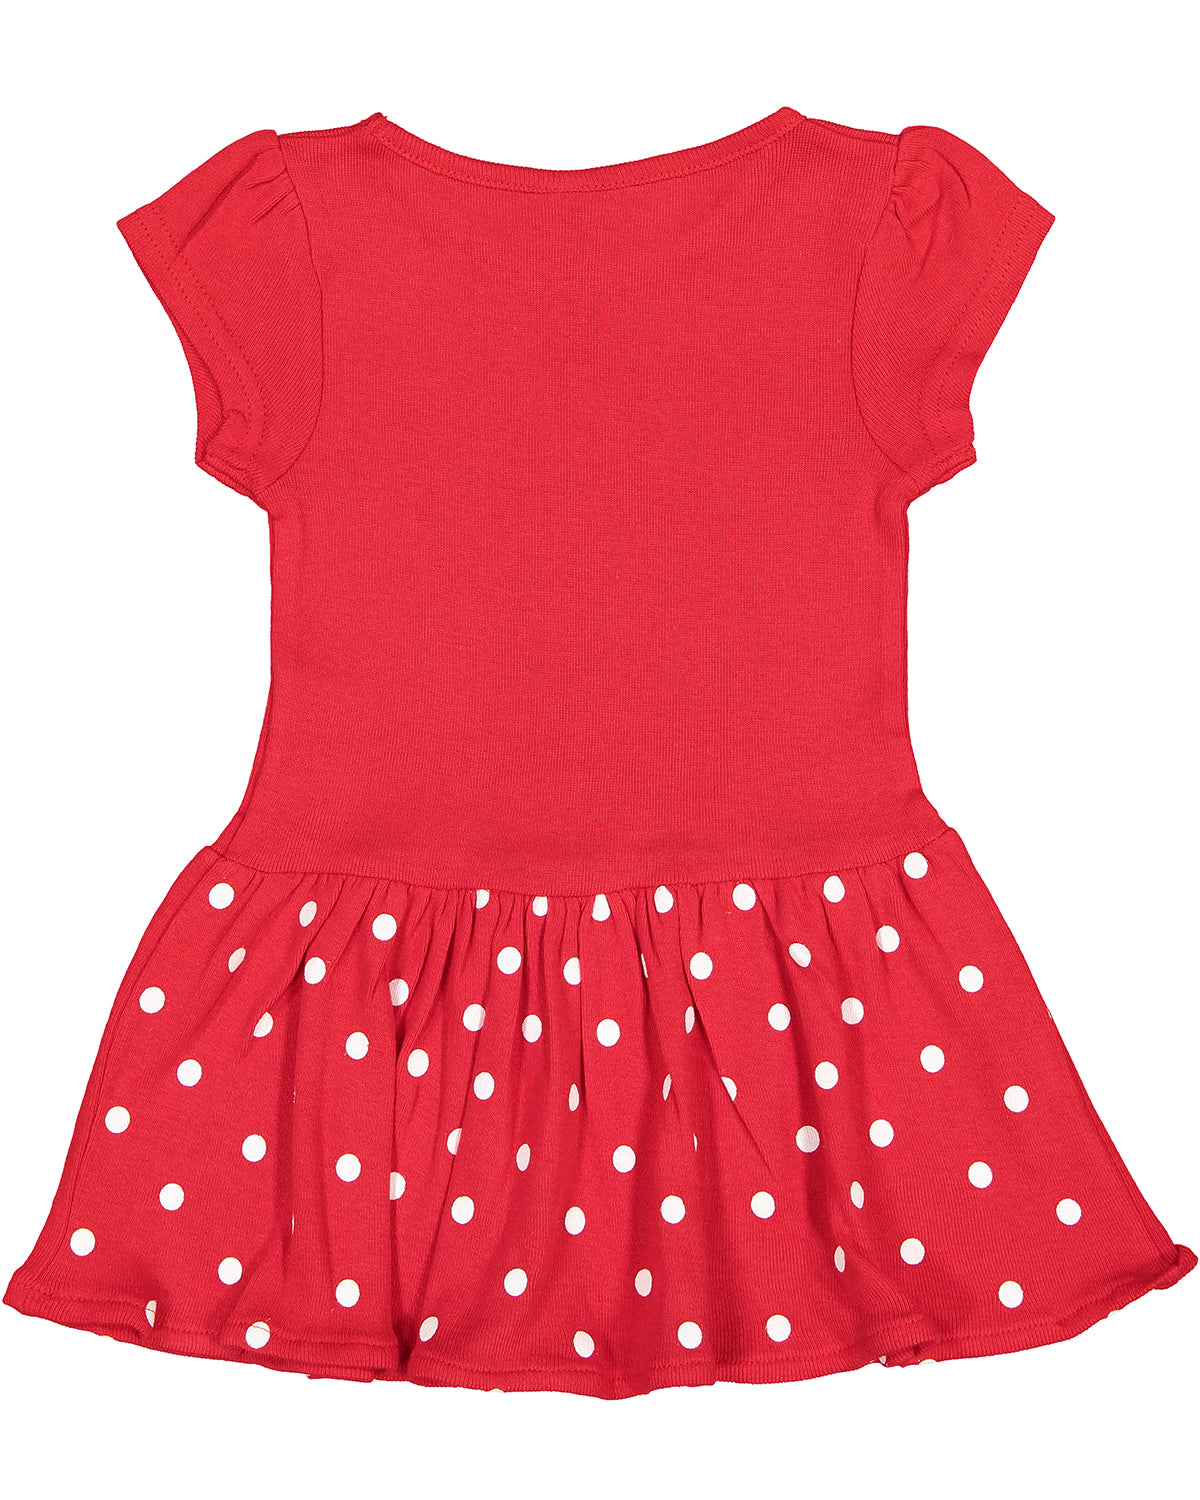 Baby Cotton Rib Dress, (Sizes: 6M - 24M), Red / White Dots